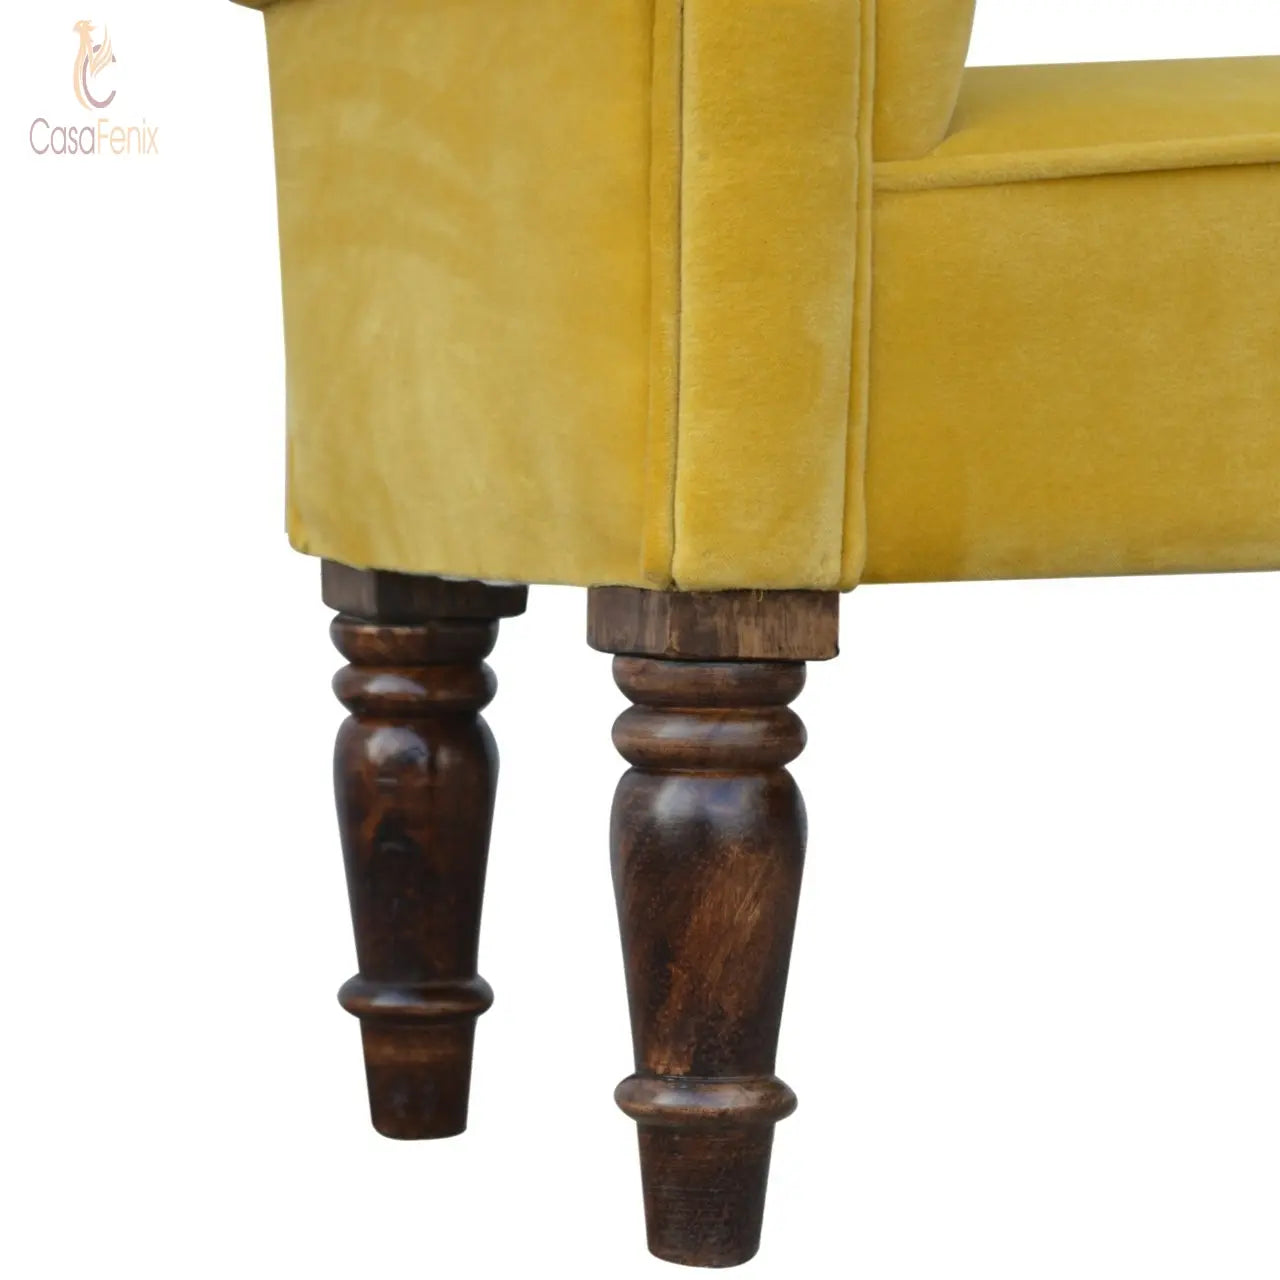 Mustard Velvet Bench Bedroom Seat Benches CasaFenix